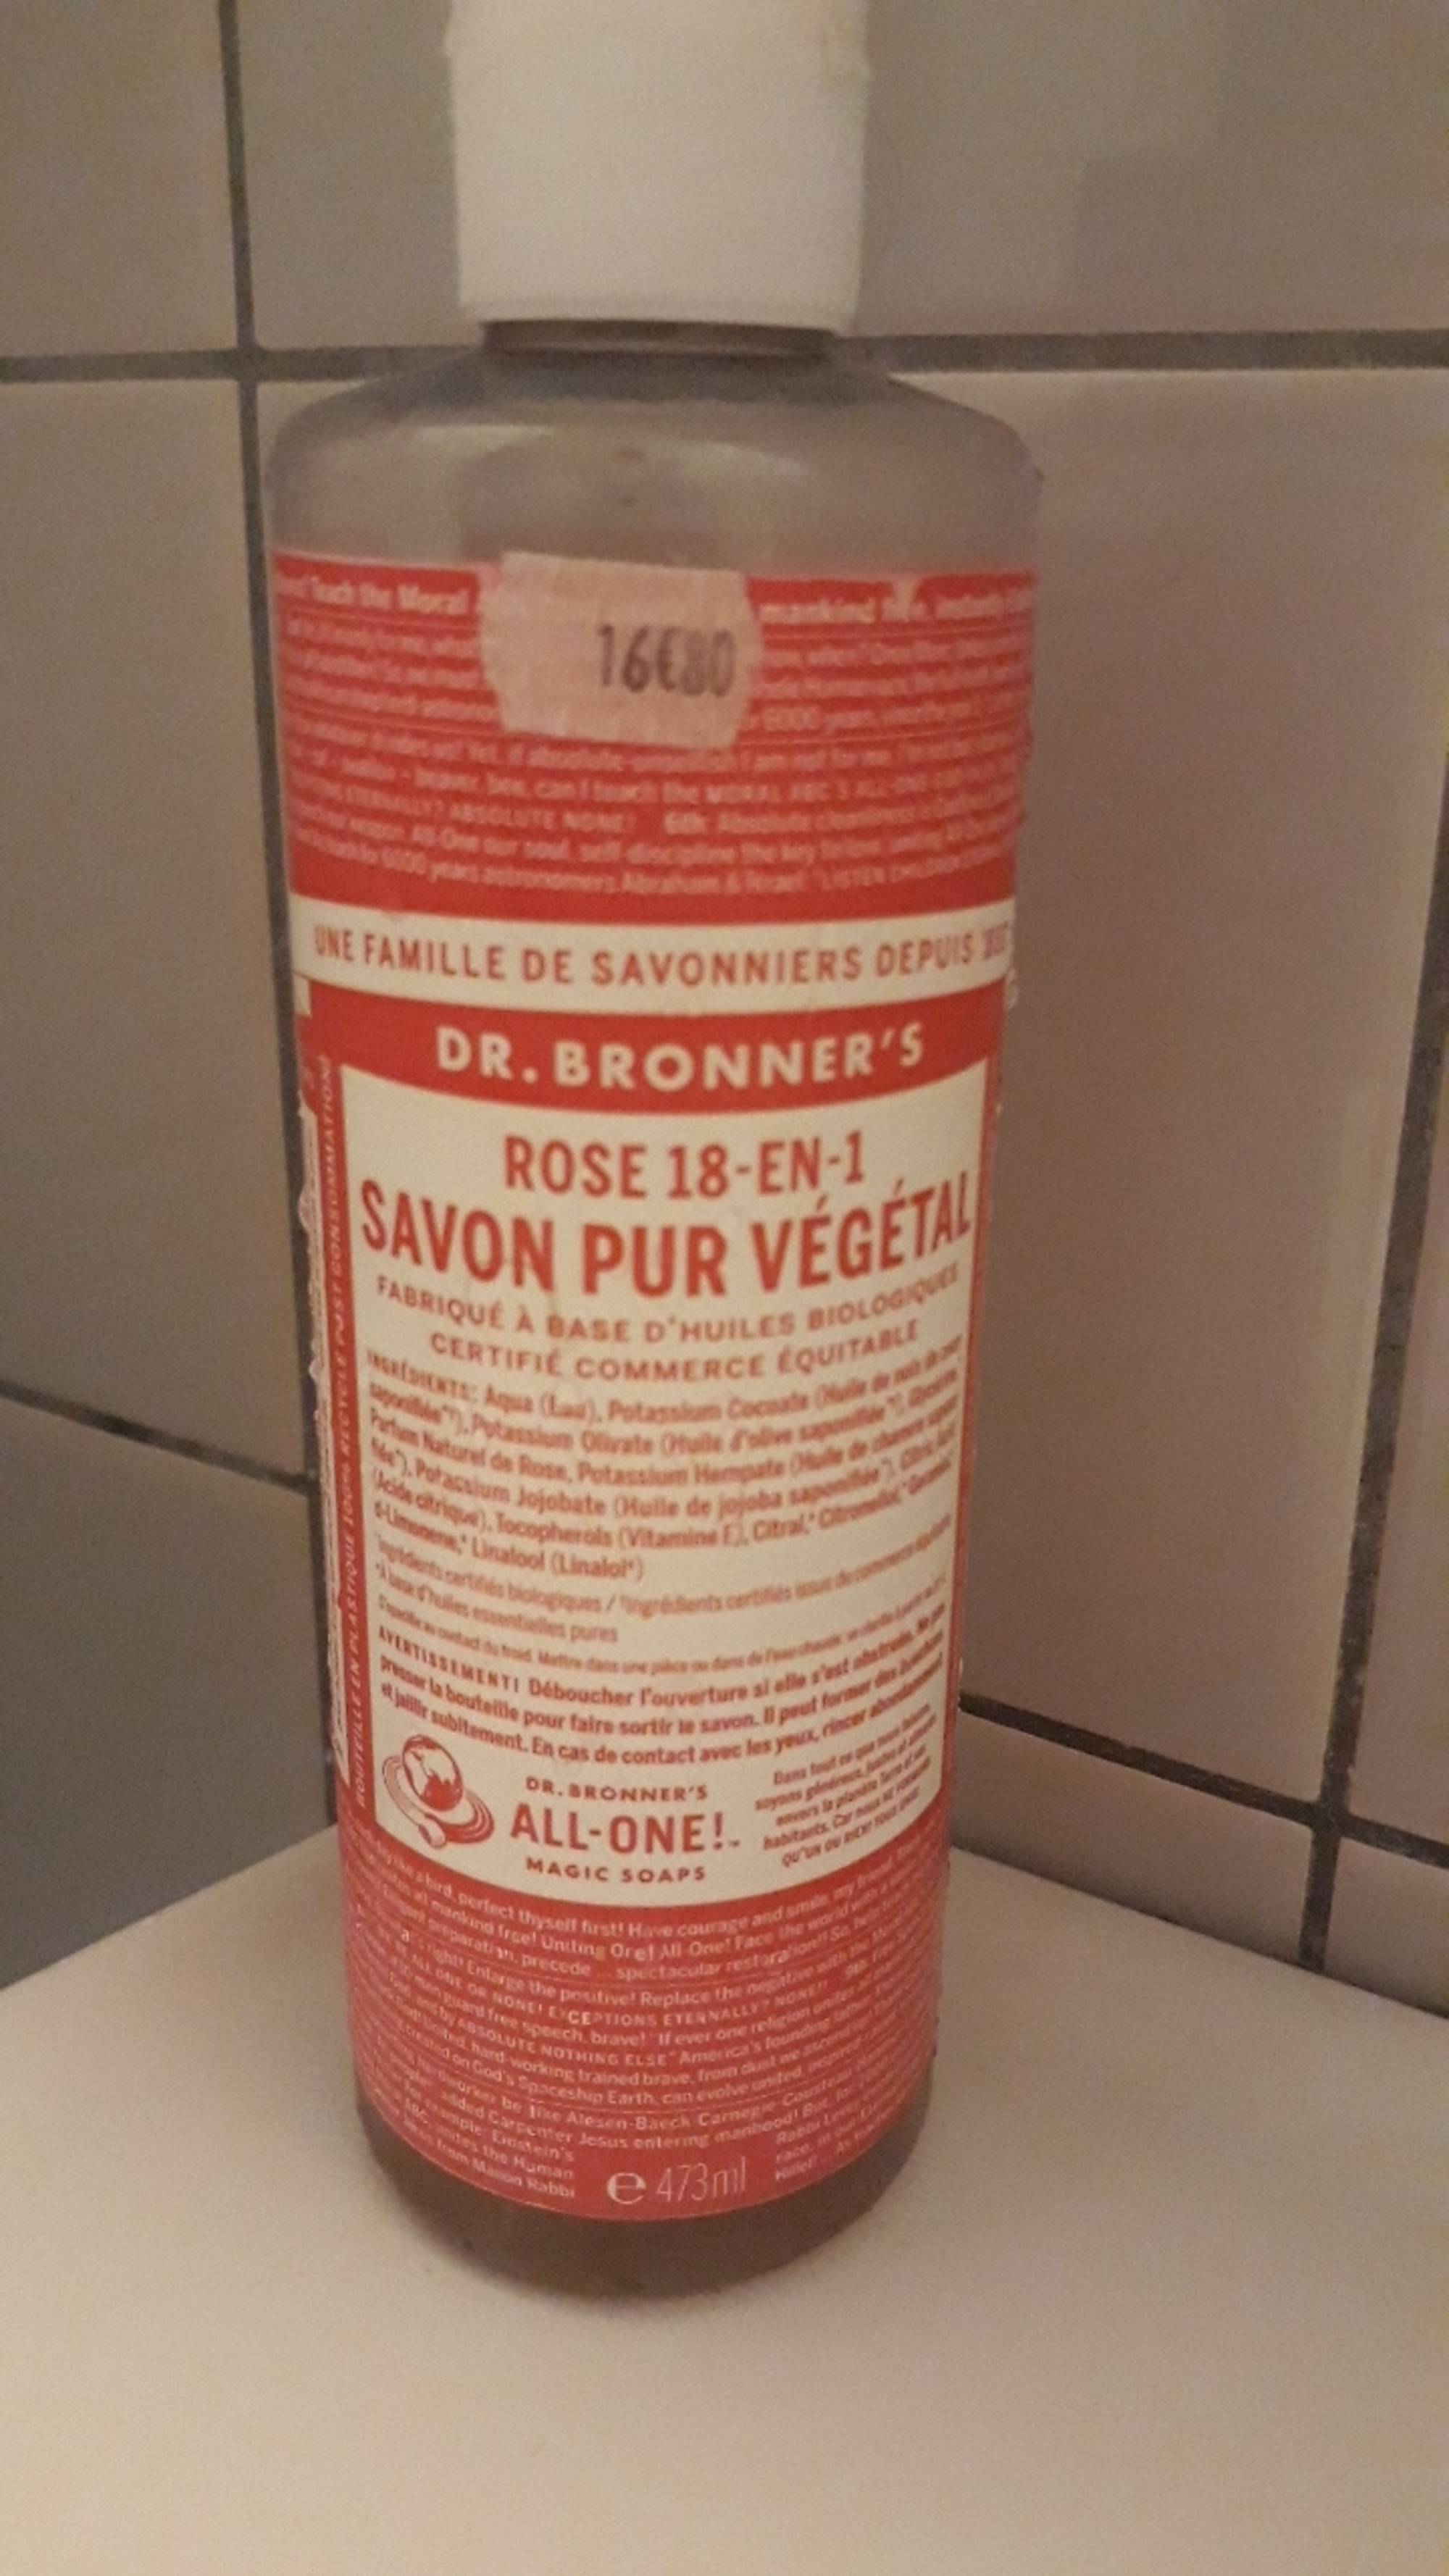 DR. BRONNER'S - Rose 18-en-1 - Savon pur végétal